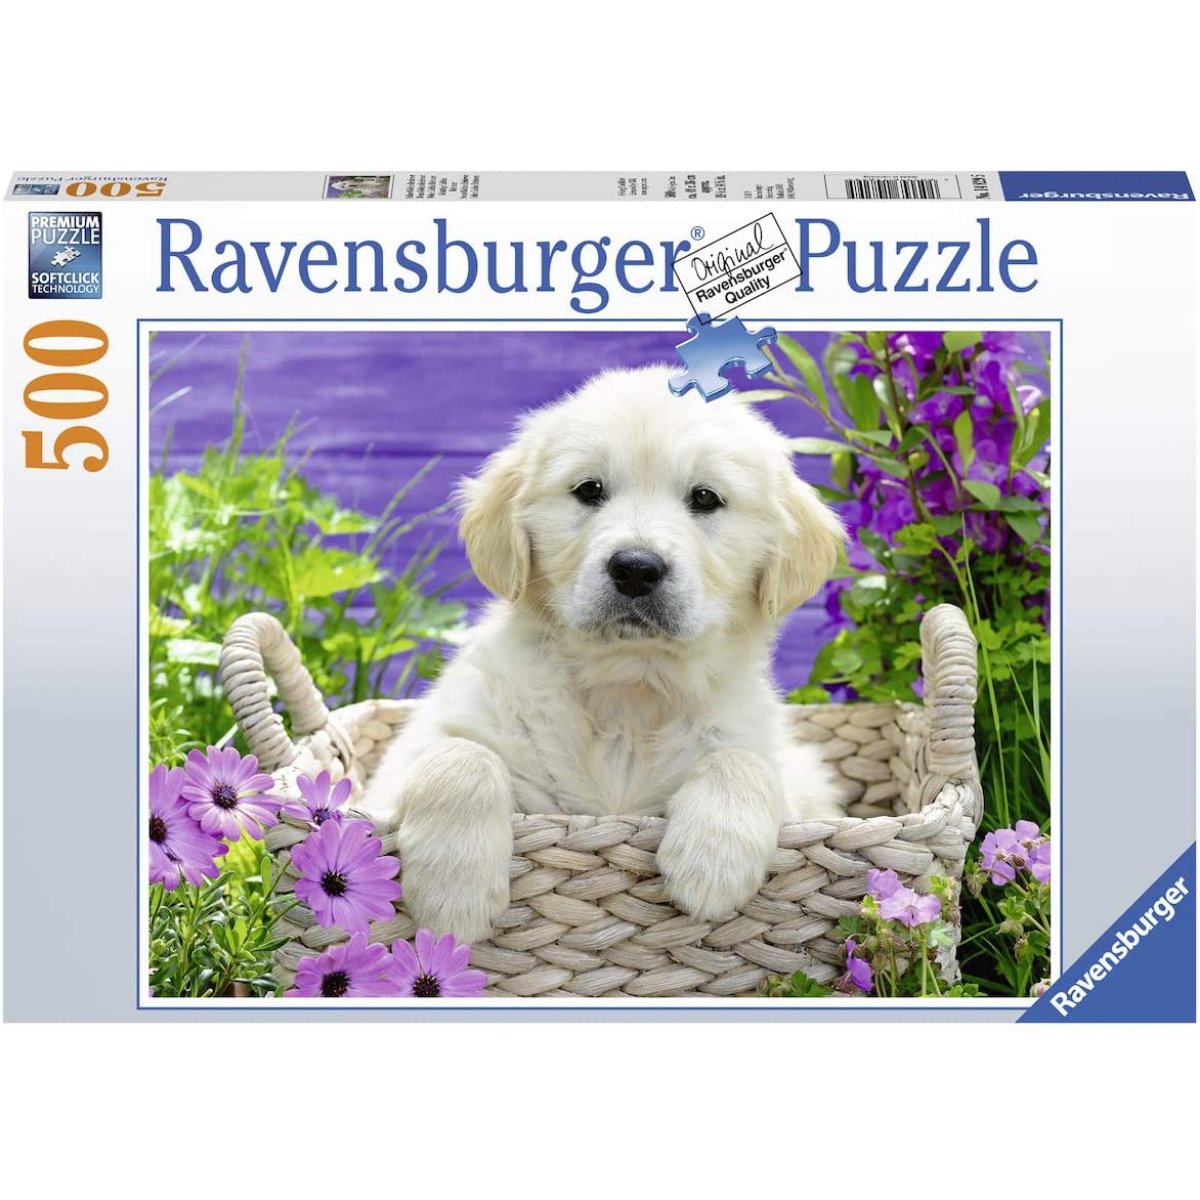 Ravensburger Sweet Golden Retriever Jigsaw Puzzle (500 Pieces) - Phillips Hobbies